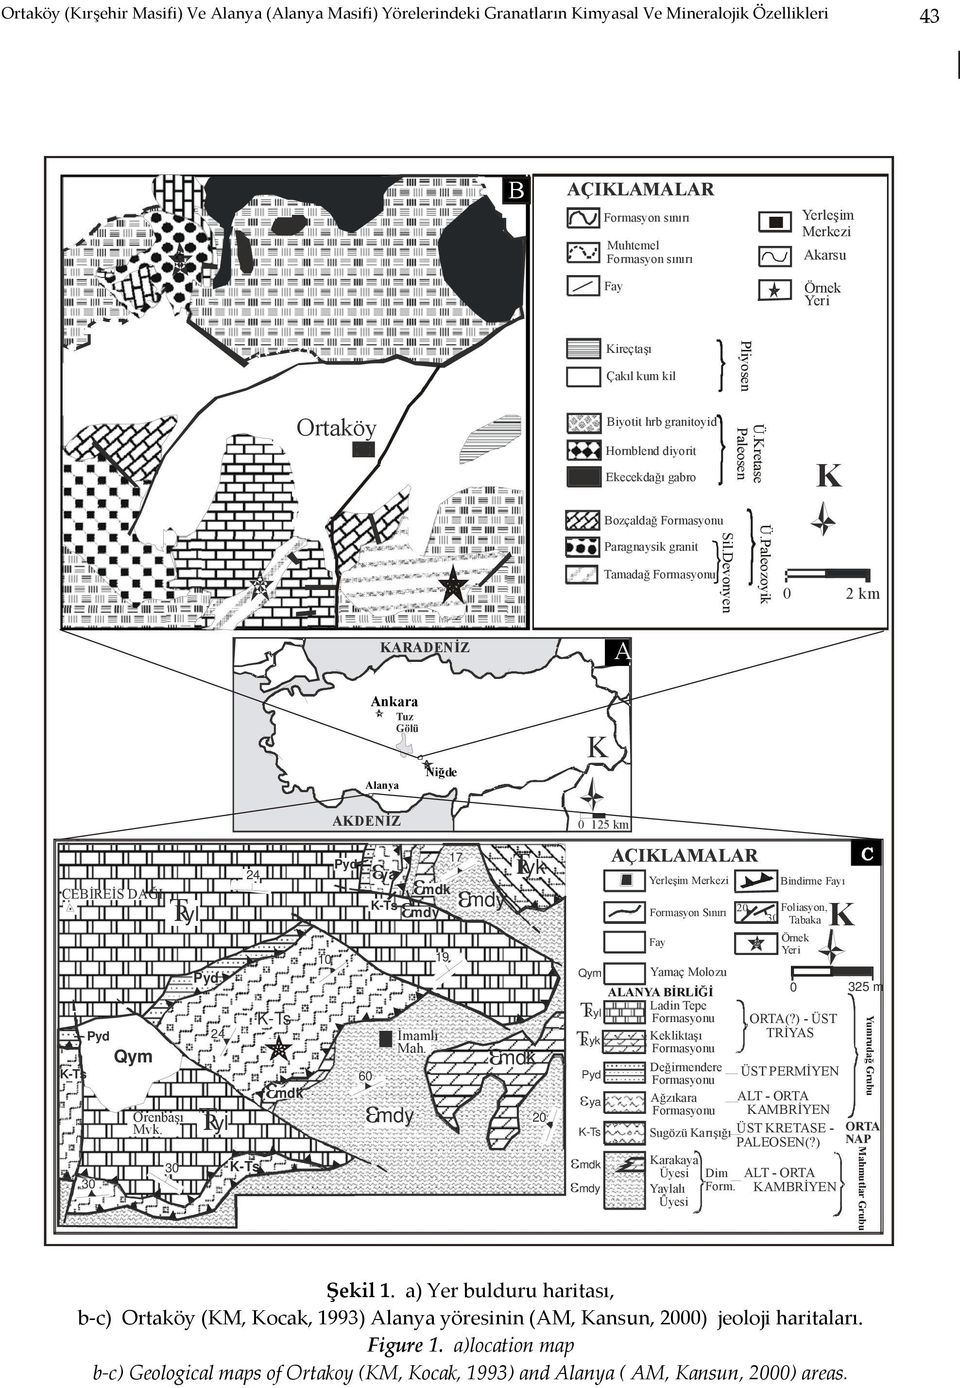 Devonyen Ü.Paleozoyik 0 2 km KARADENİZ A Ankara Tuz Gölü Alanya Niğde K CEBİREİS DAĞI K-Ts Pyd 30 Qym Örenbaşı Mvk.